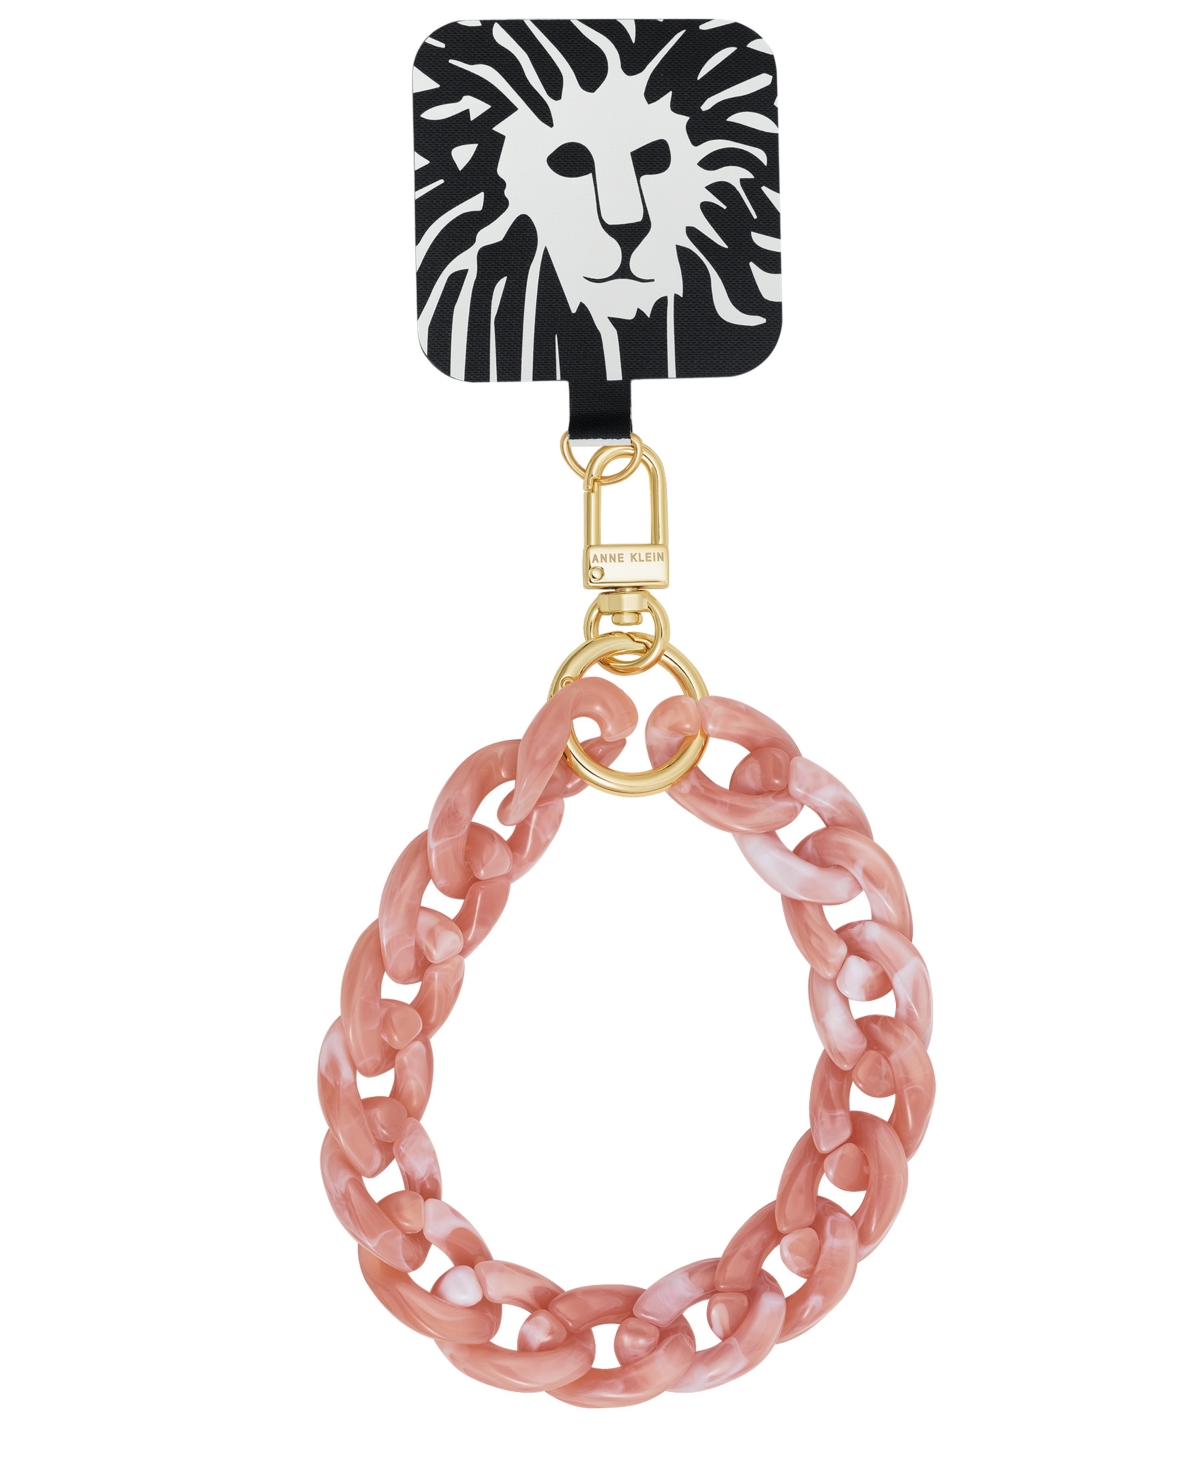 Women's Pink Plastic Acetate Chain Link Wrist Strap designed for Smart Phones